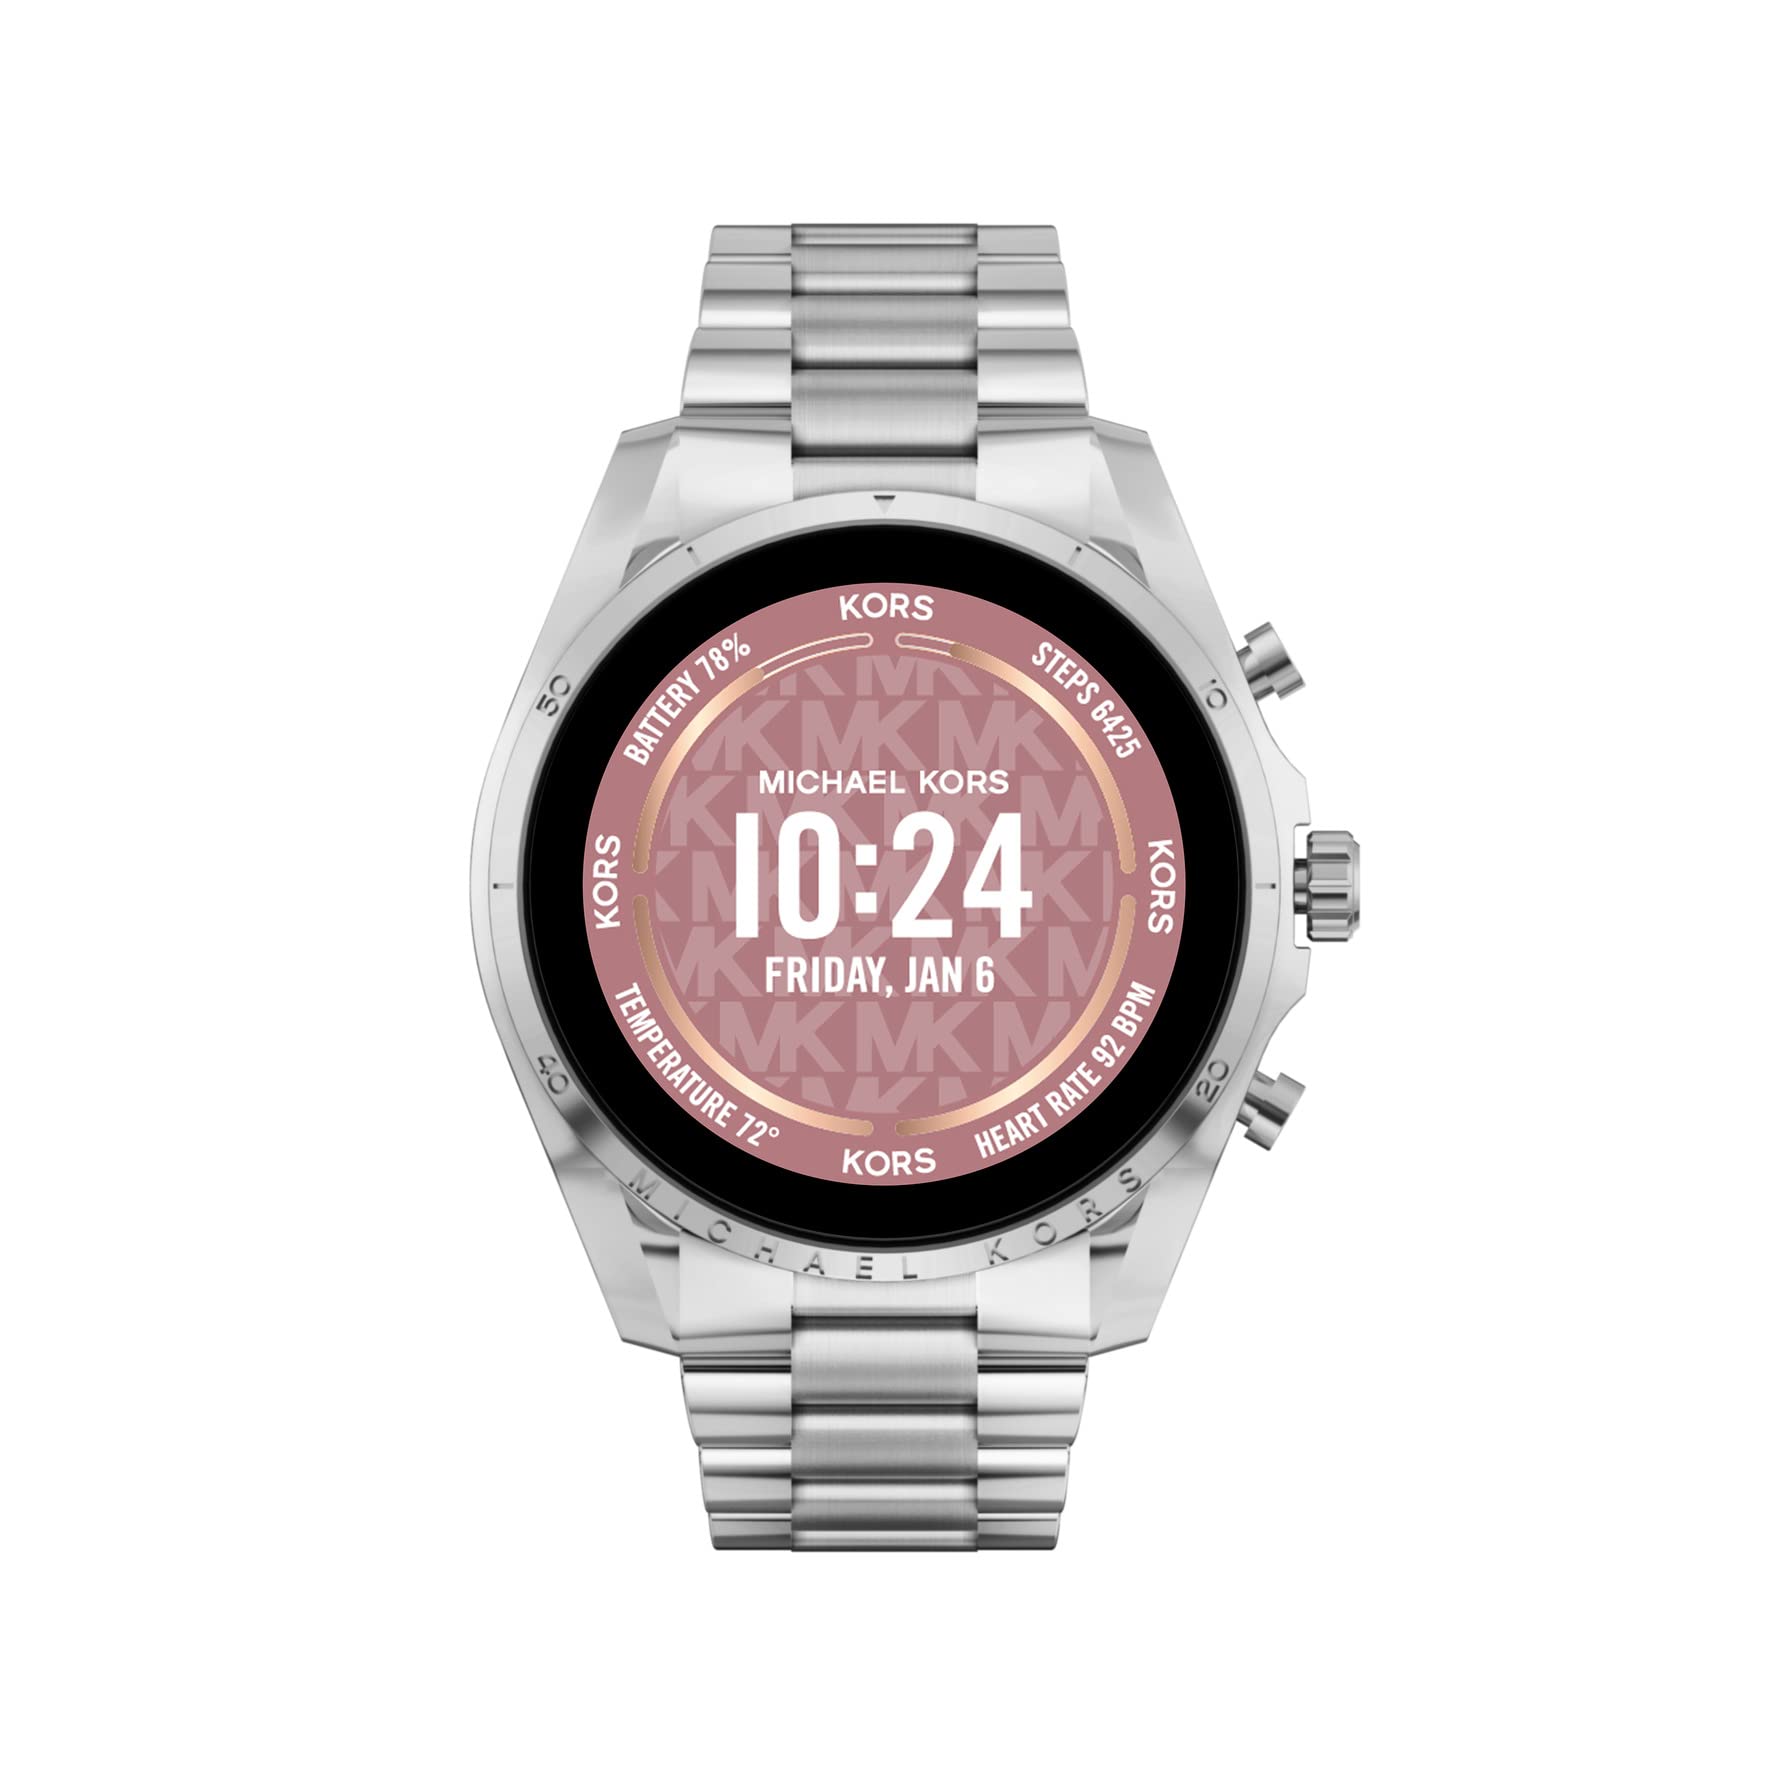 Michael Kors Men's & Women's Gen 6 44mm Touchscreen Smart Watch with Alexa Built-In, Fitness Tracker, Sleep Tracker, Heart Rate Monitor, GPS, Music Control, Smartphone Notifications